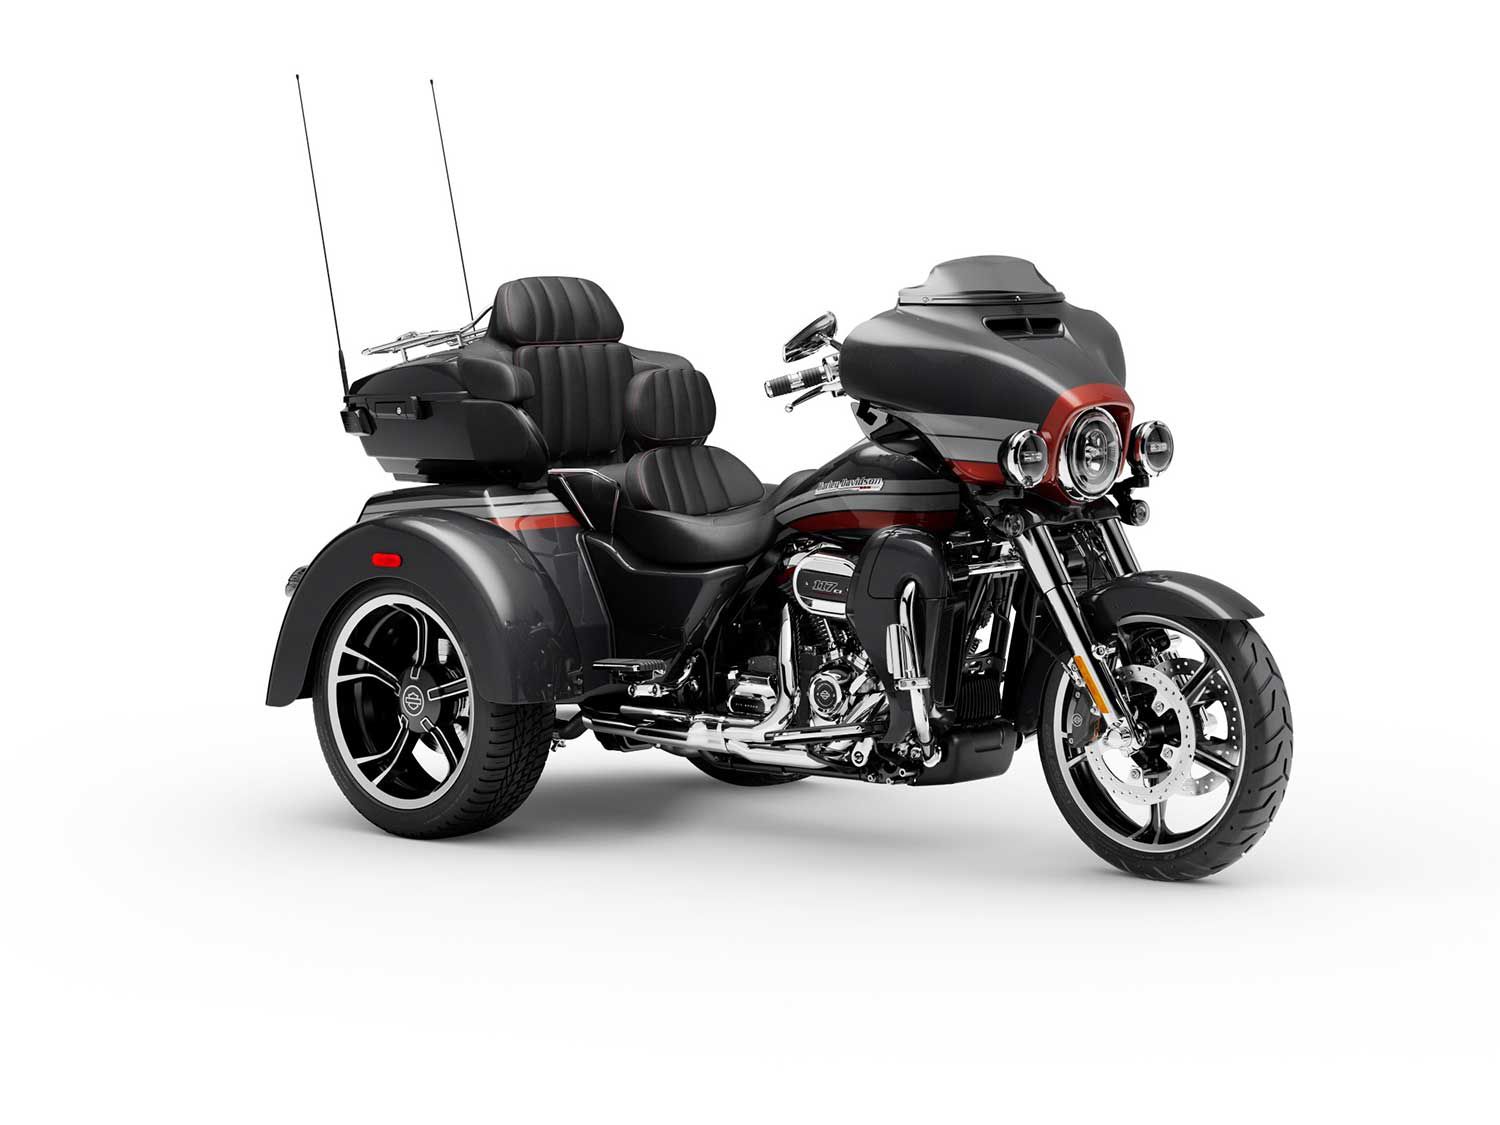 Meet Harley Davidson S Newest Cvo The 2020 Tri Glide Motorcycle Cruiser